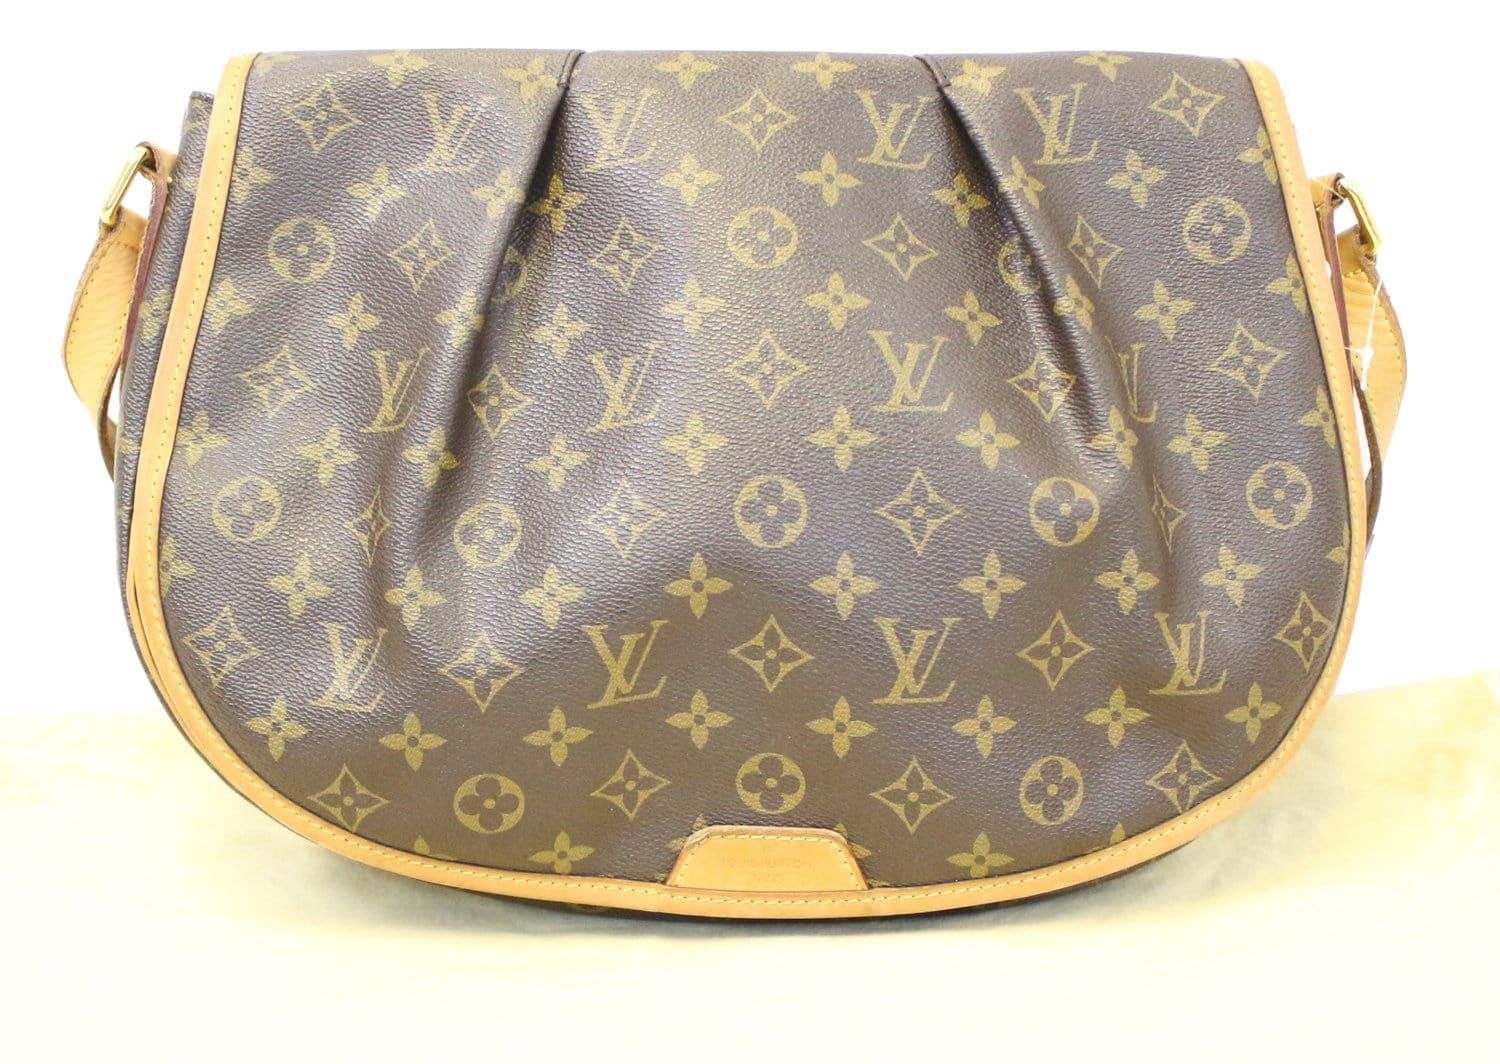 JC_Shopper - 【Louis Vuitton】LV GOLF BAG M44714